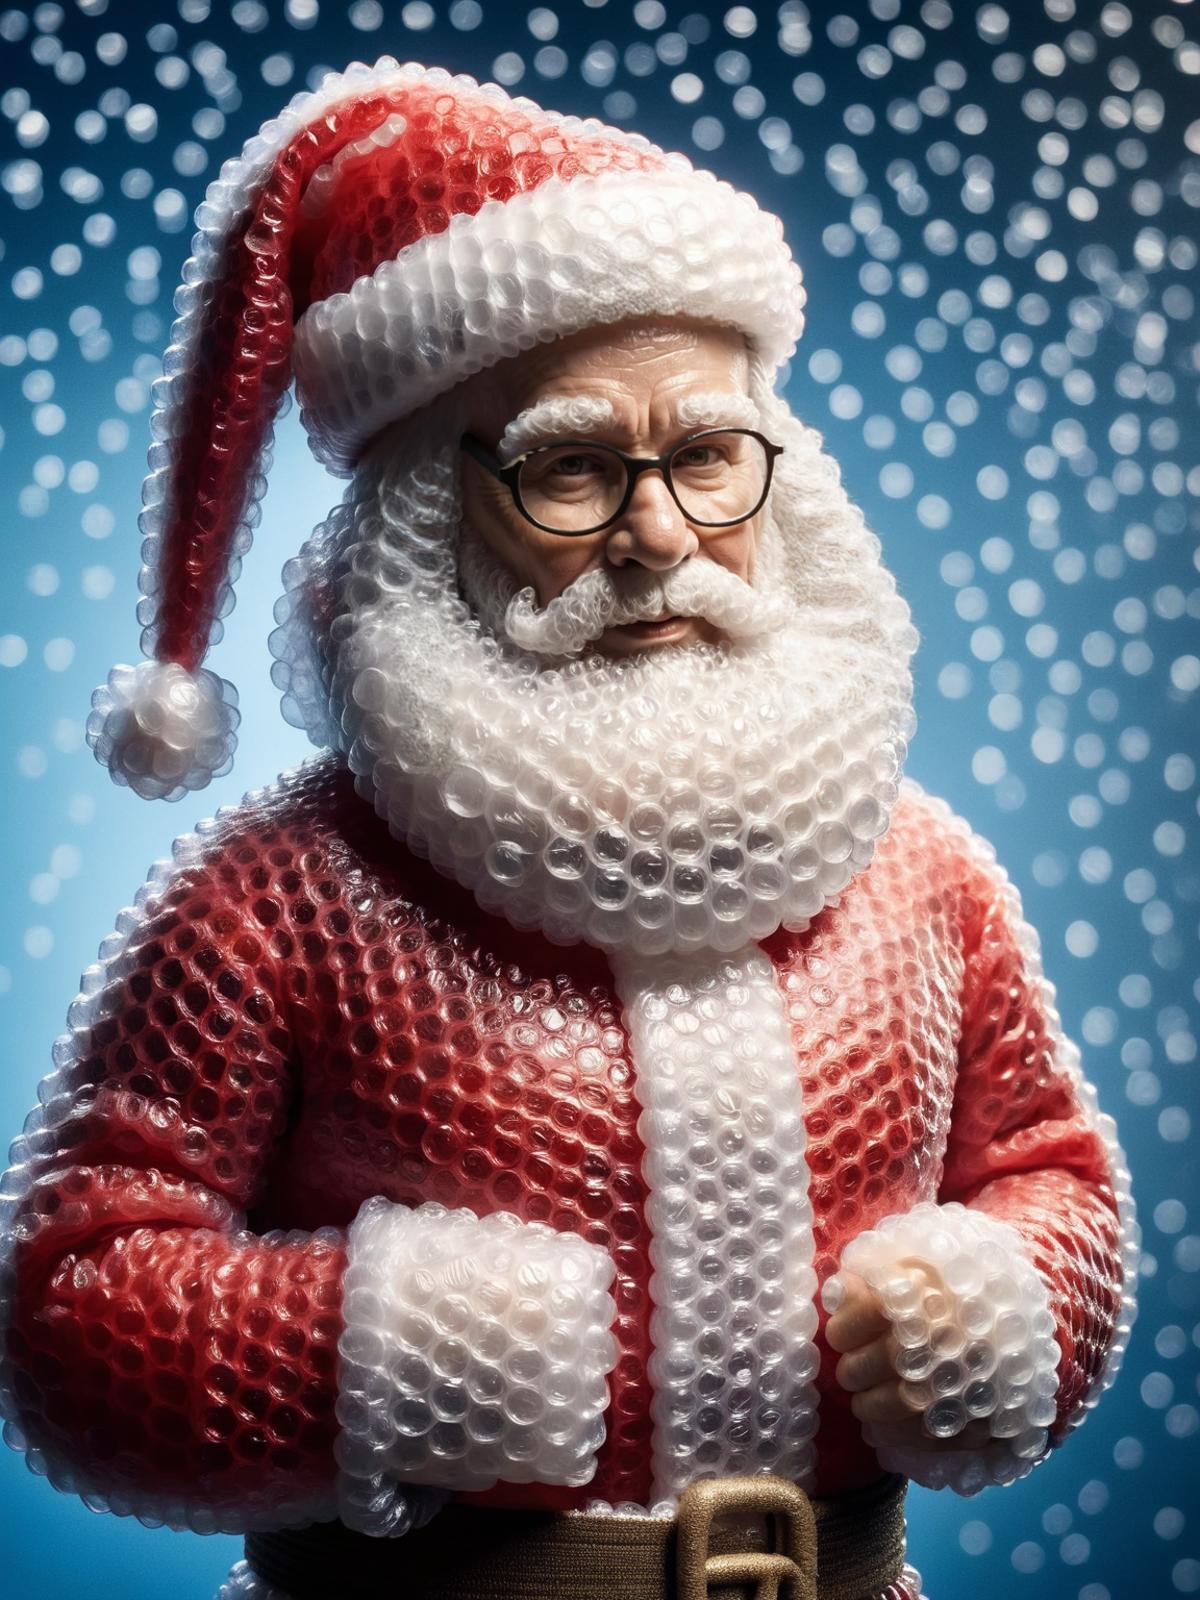 A Santa Claus model made of plastic bubbles.